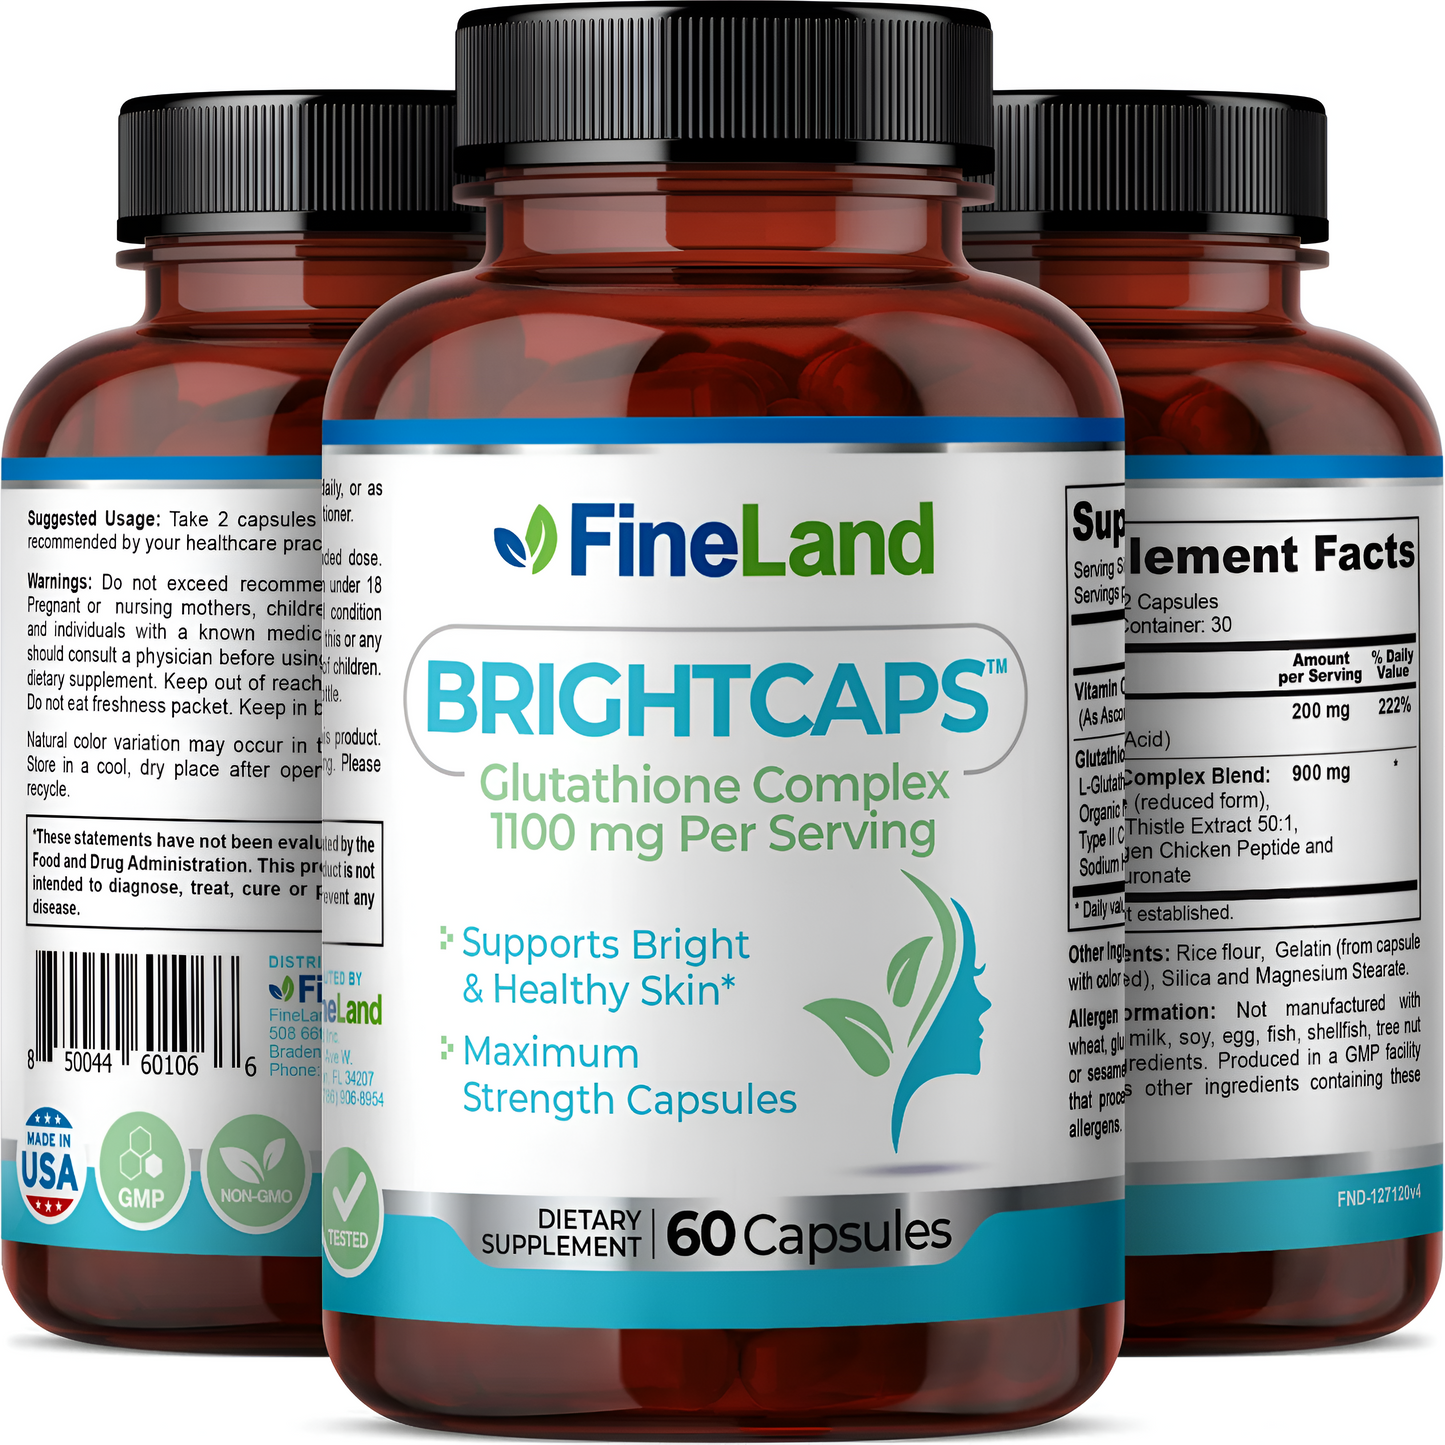 Brightcaps Glutathione complex 1100mg , FineLand- 60 capsulas